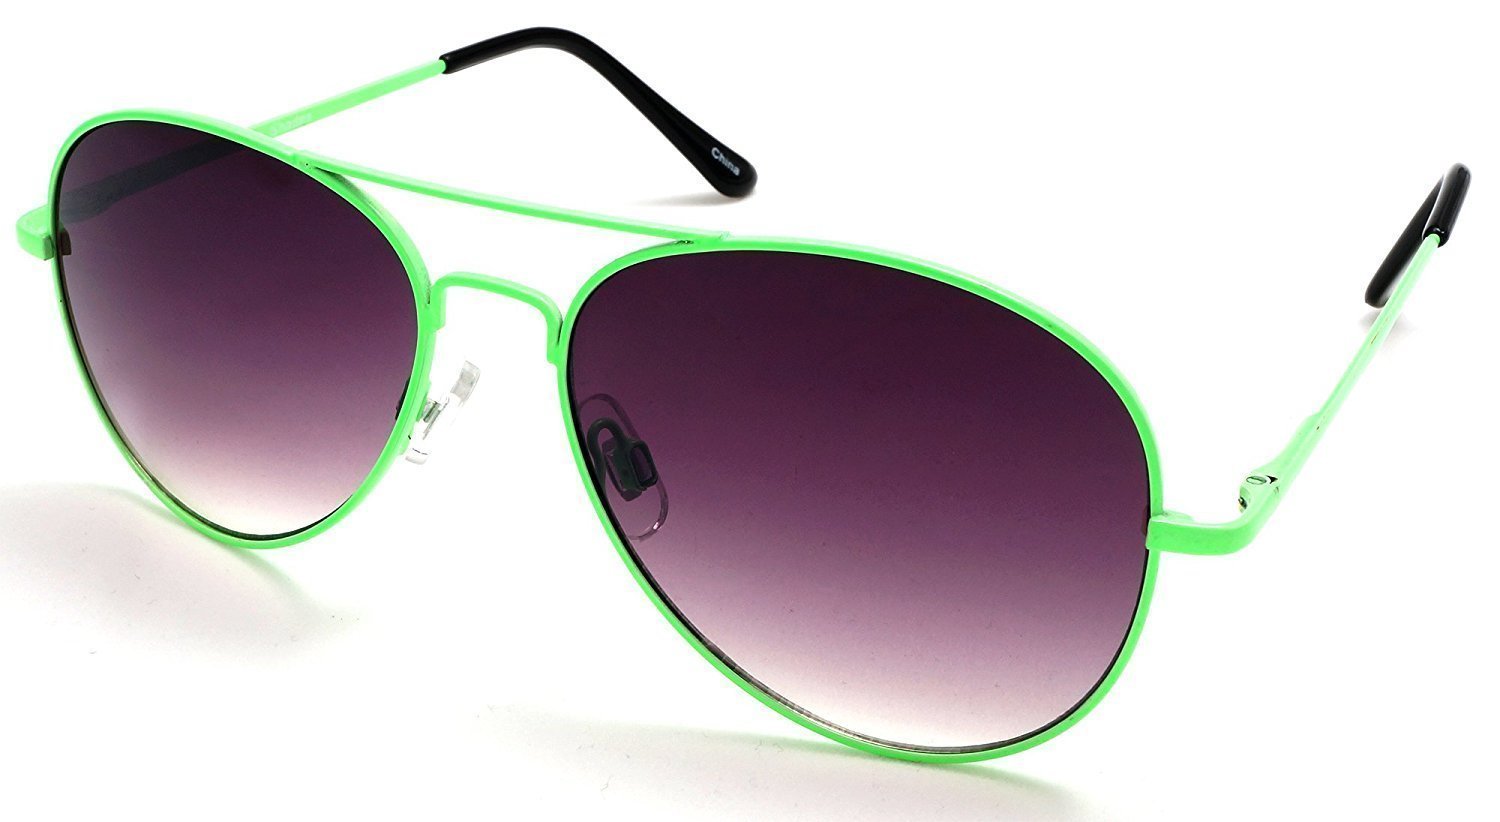 Unisex Pilot Military Neon Classic Sunglasses - Mambo Madness Neon Shades - Green-Samba Shades